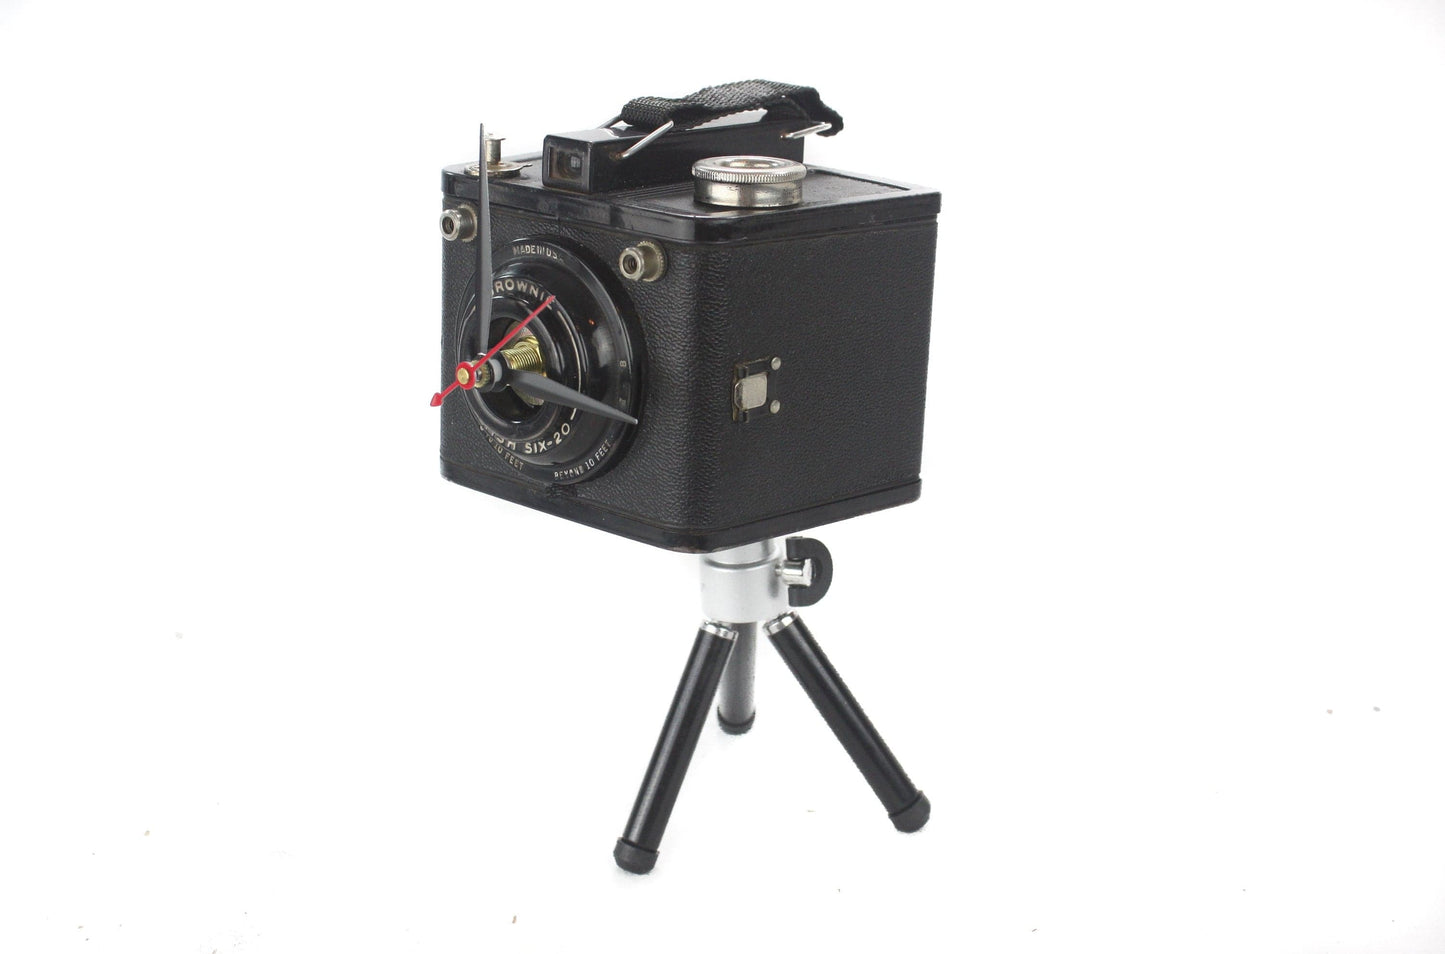 LightAndTimeArt Camera clocks Vintage Tripod Desk Clock - Brownie Flash Six-20/16 - Repurposed Vintage Camera